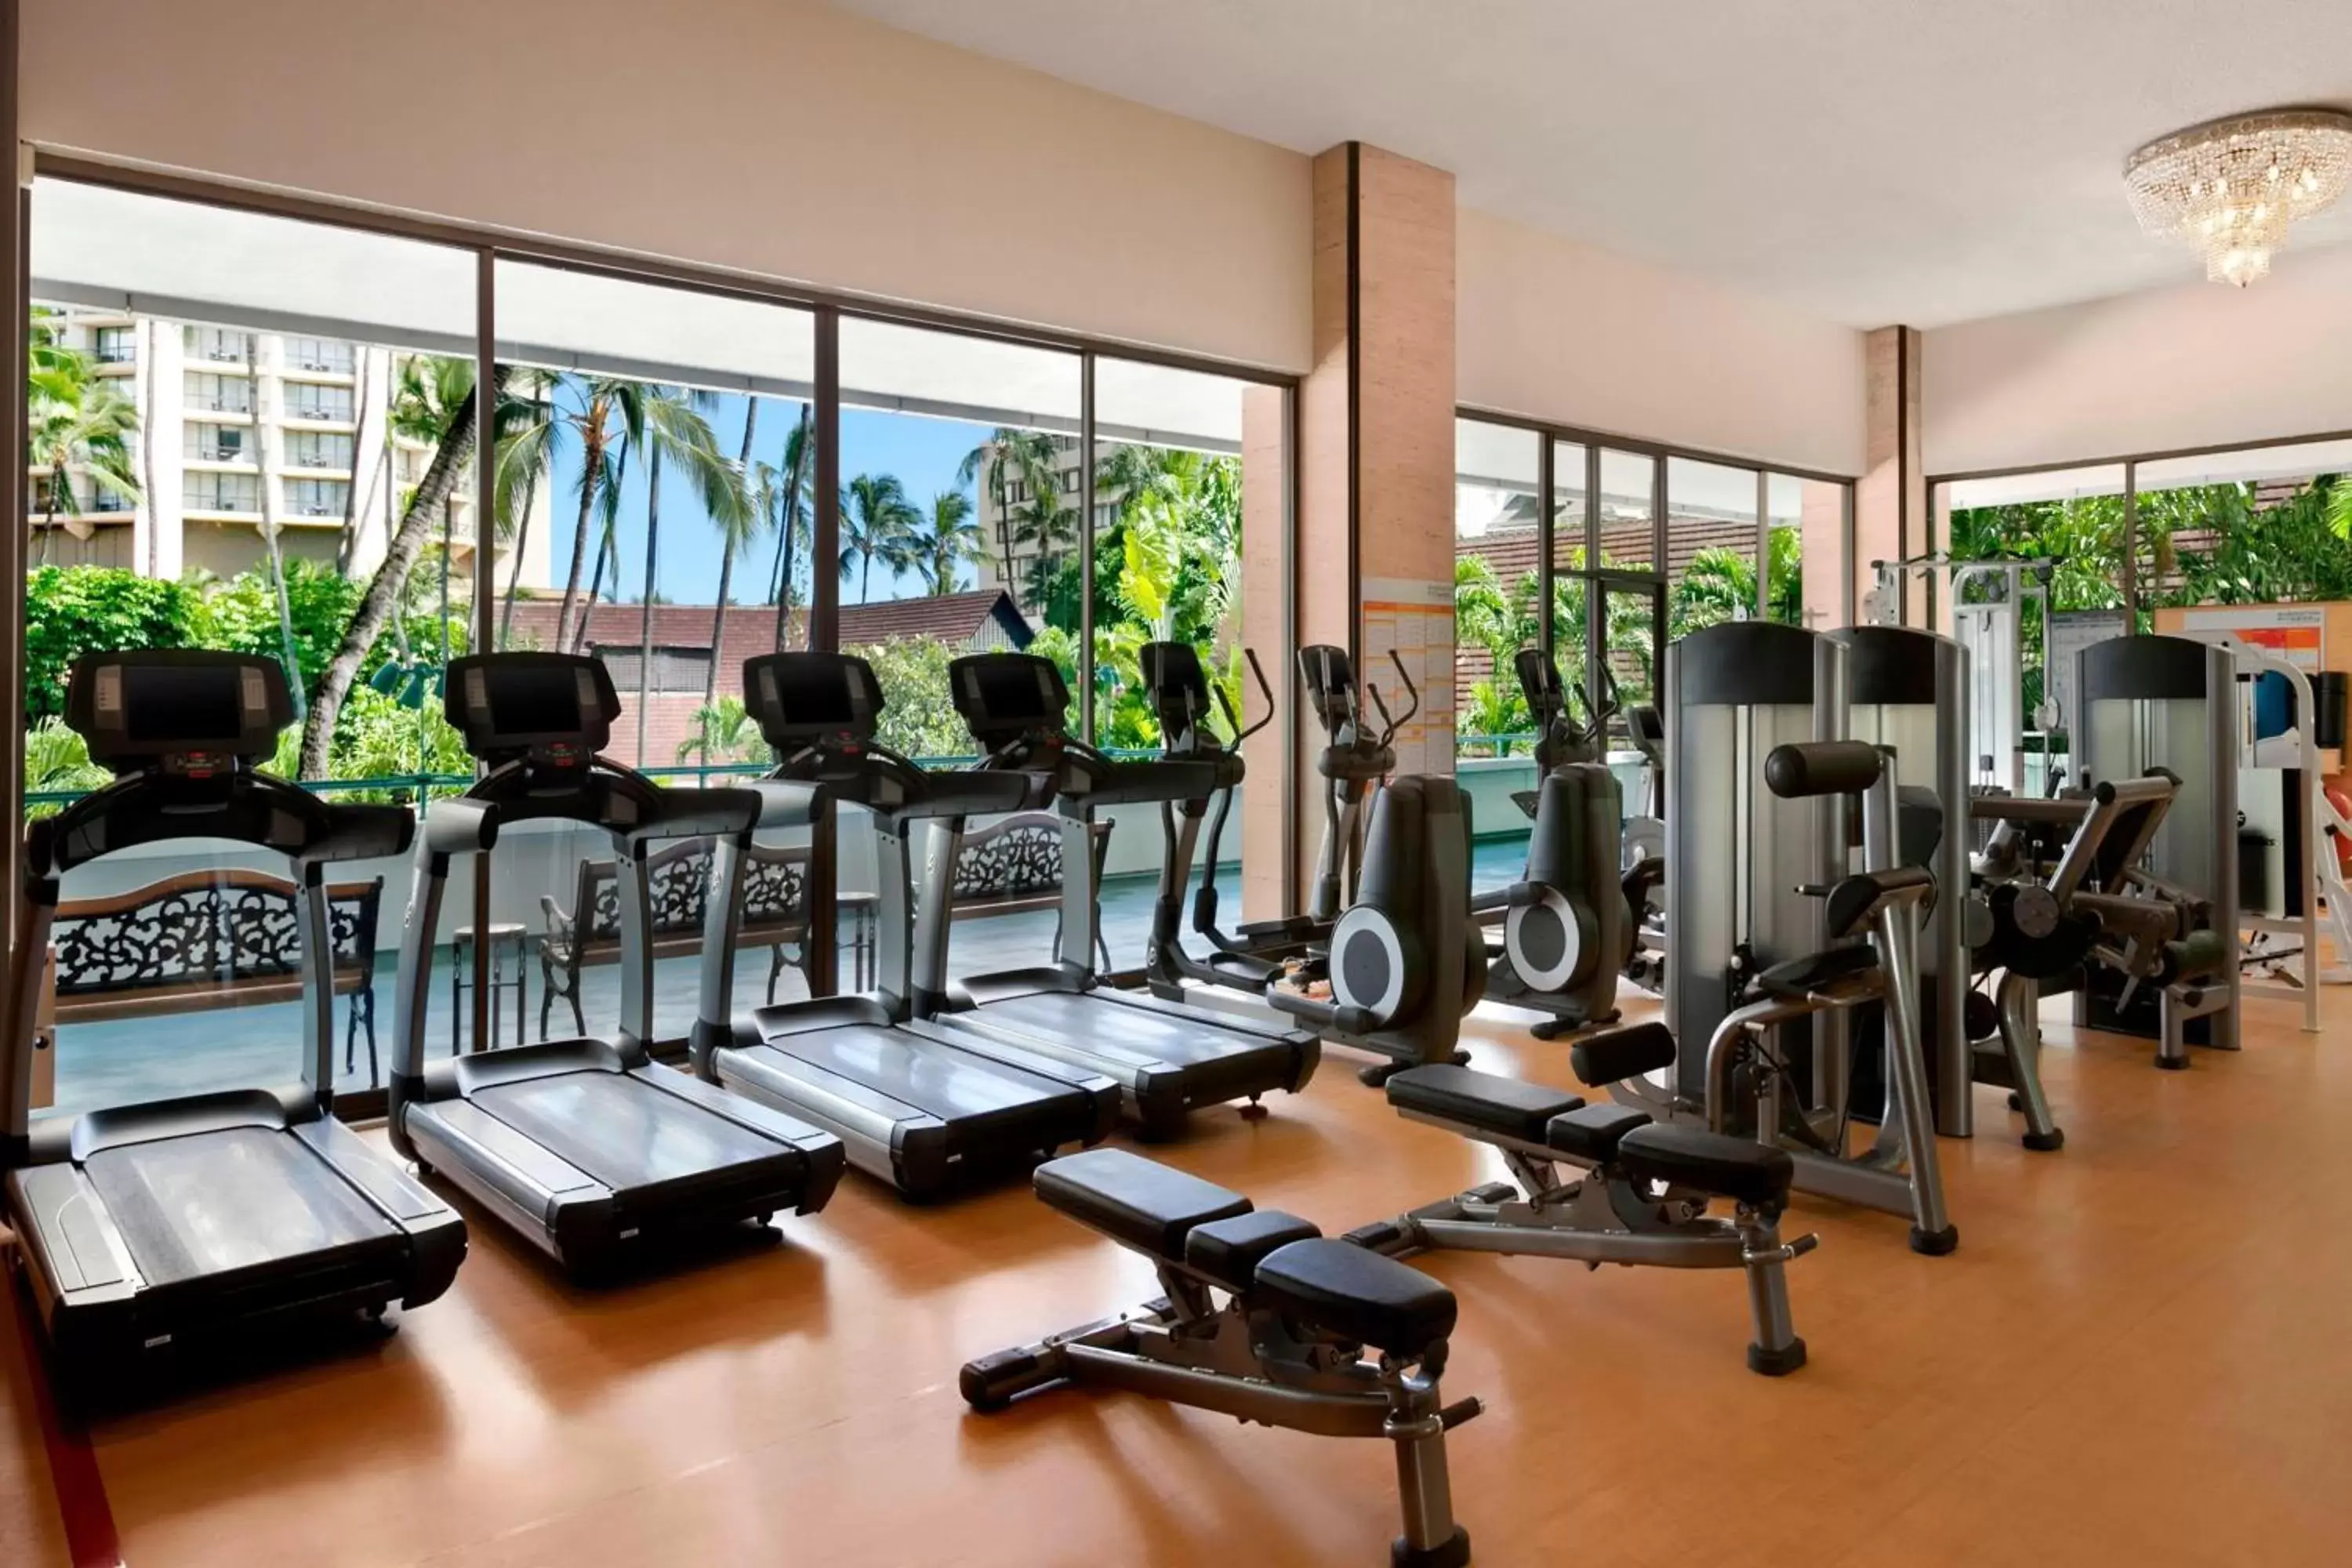 Fitness centre/facilities, Fitness Center/Facilities in Sheraton Princess Kaiulani